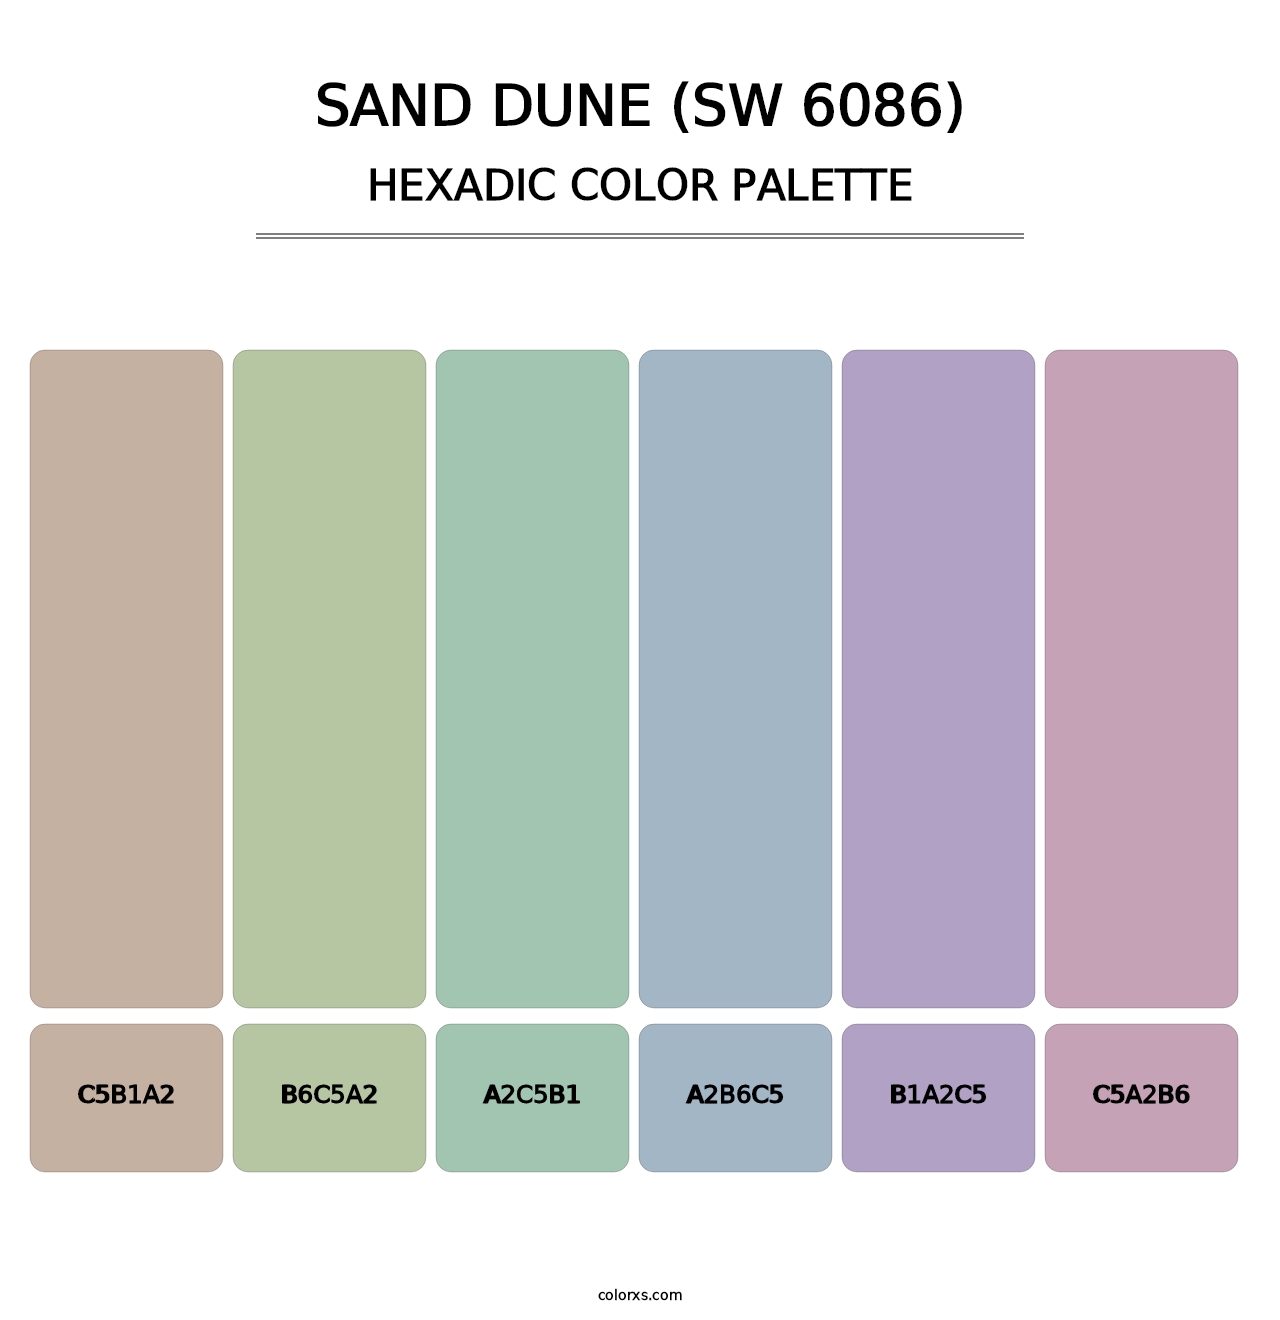 Sand Dune (SW 6086) - Hexadic Color Palette